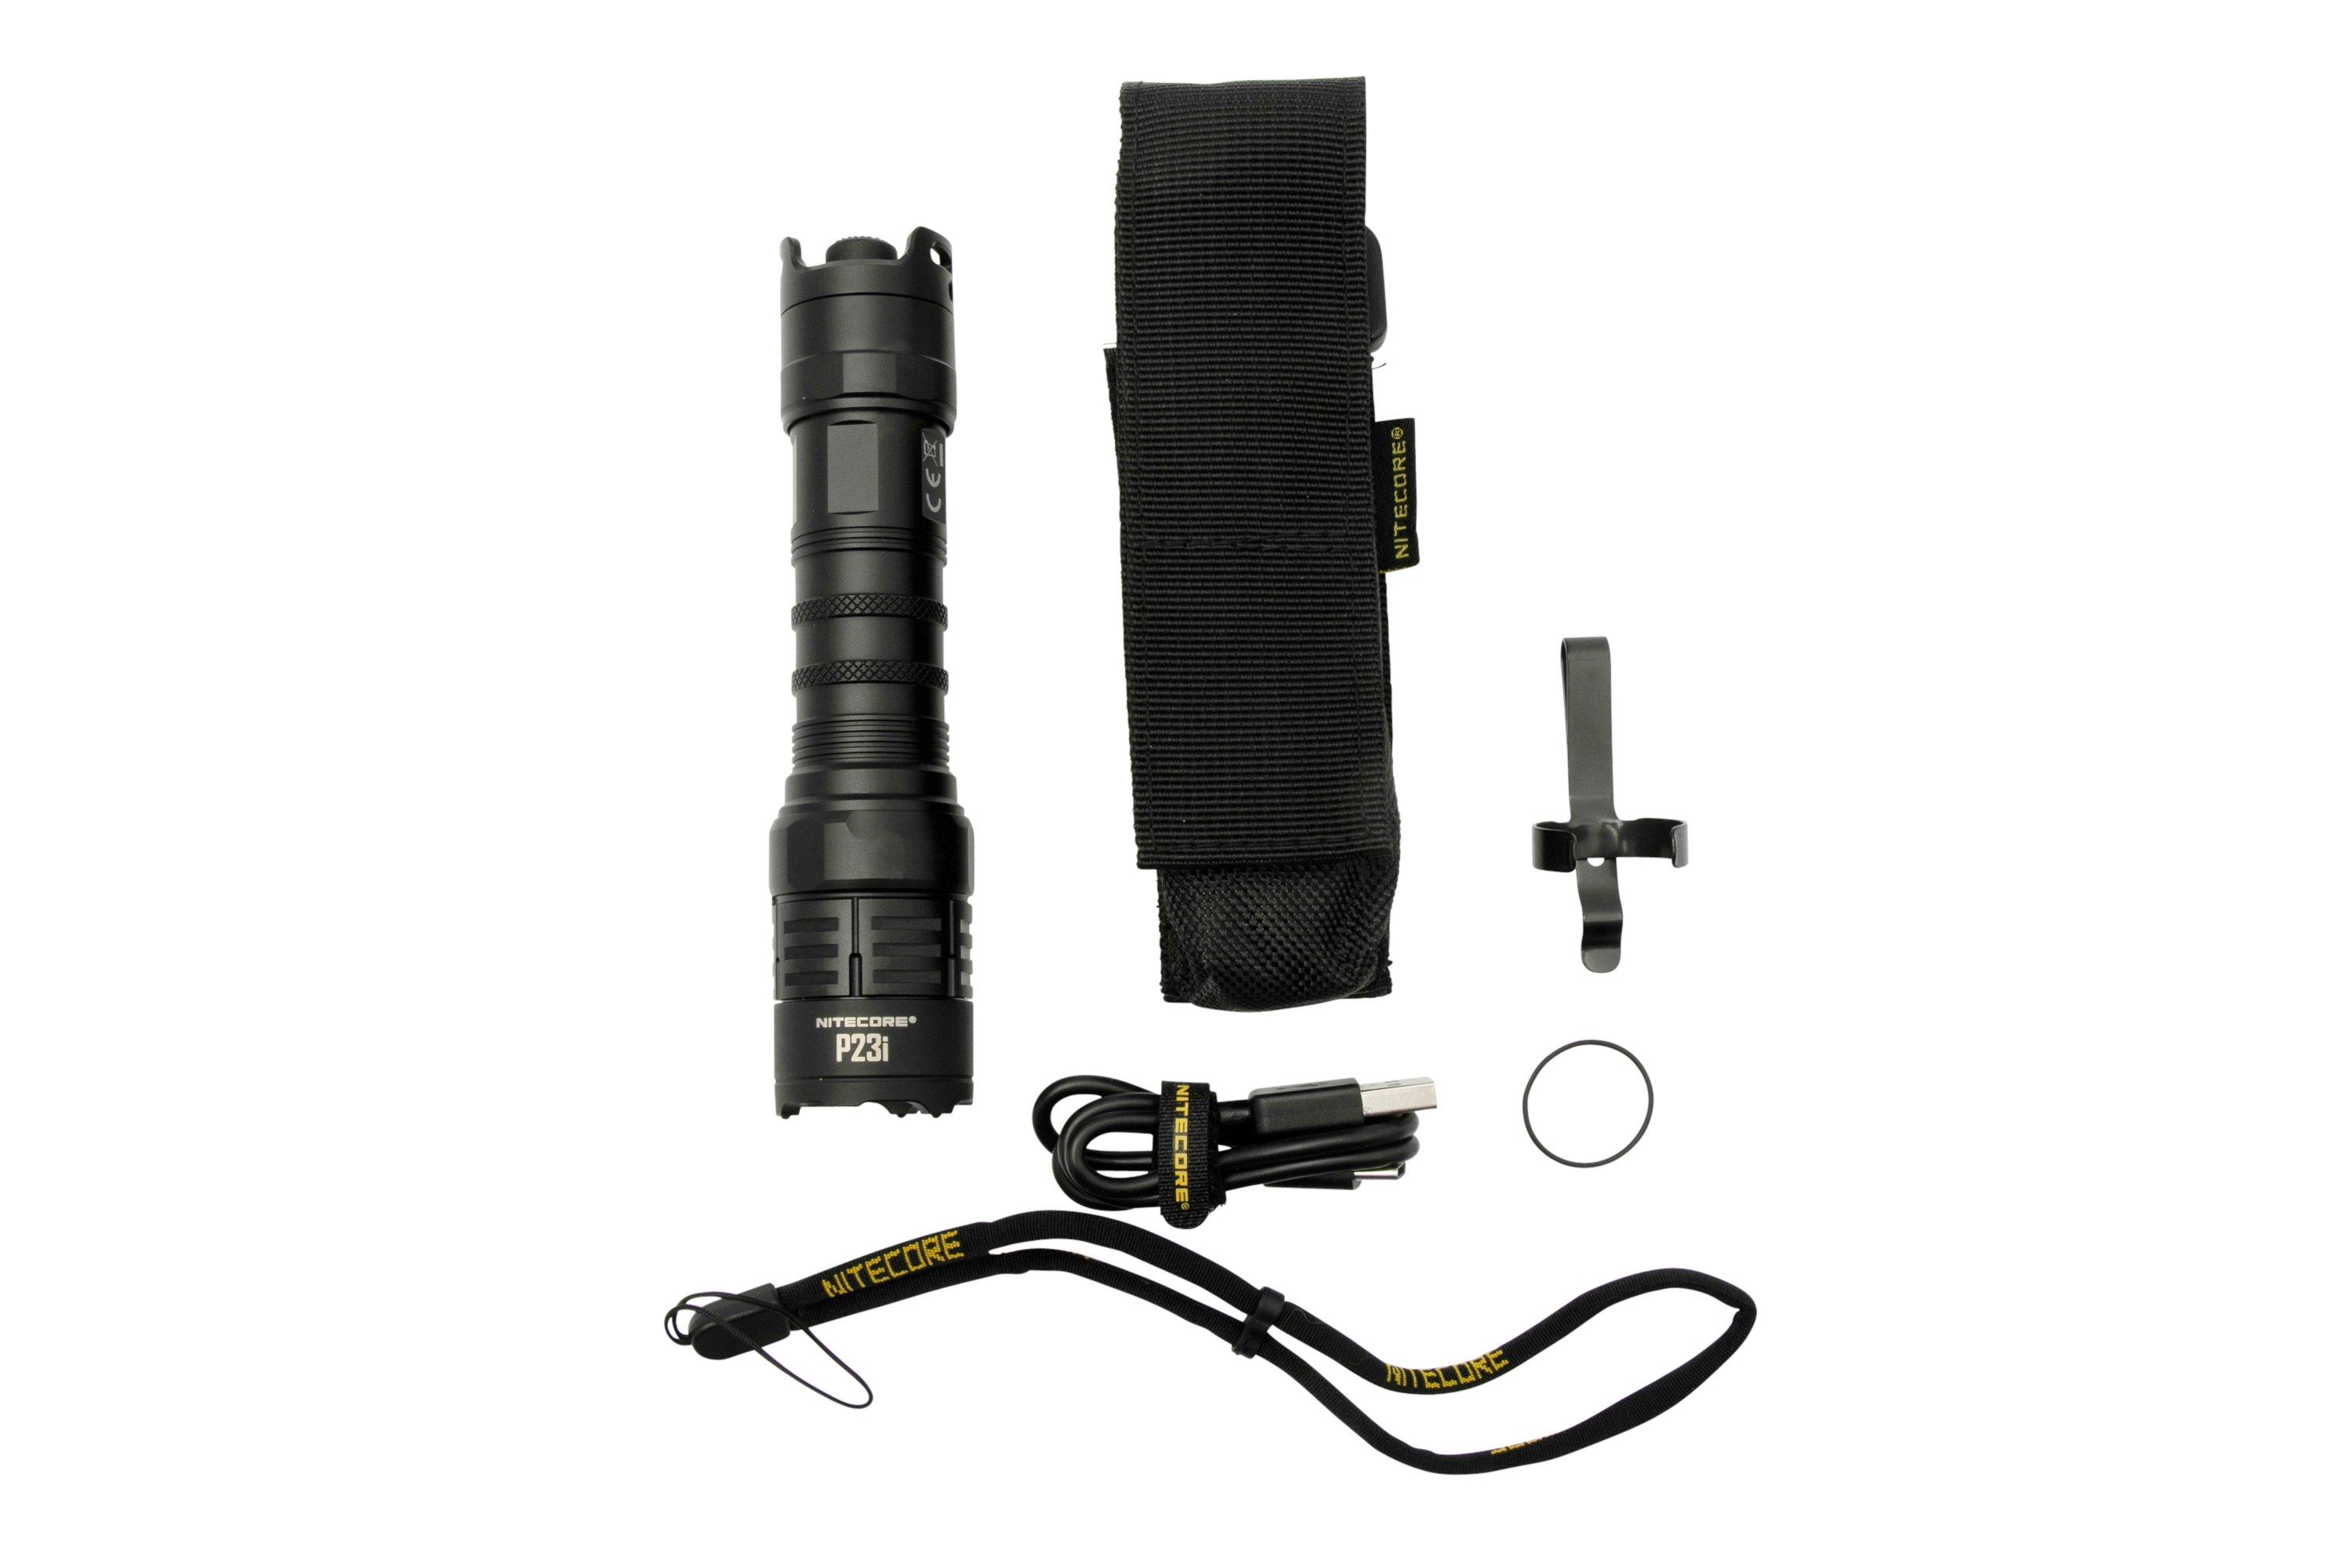 NiteCore P23i rechargeable tactical flashlight, 3000 lumens